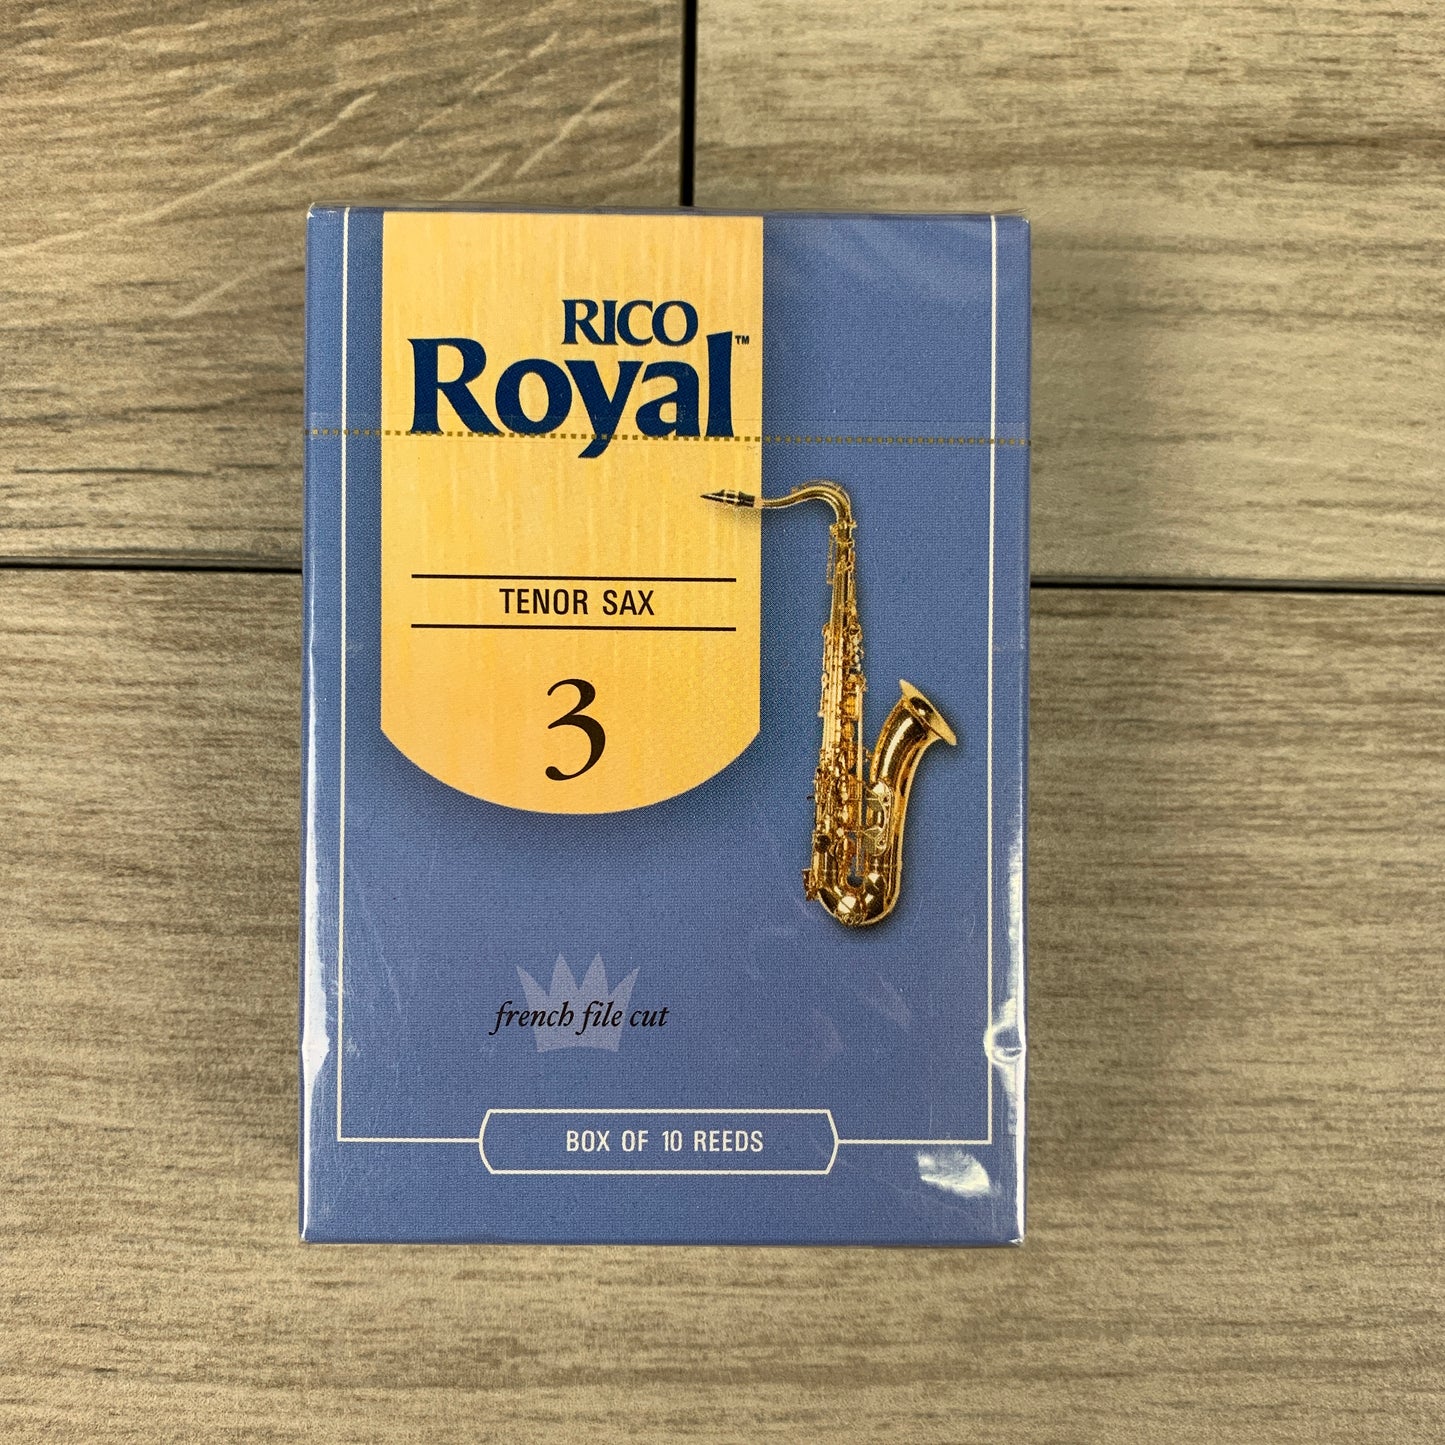 Royal by D'Addario Tenor Sax Reeds, Strength 3.0 (Box of 10)